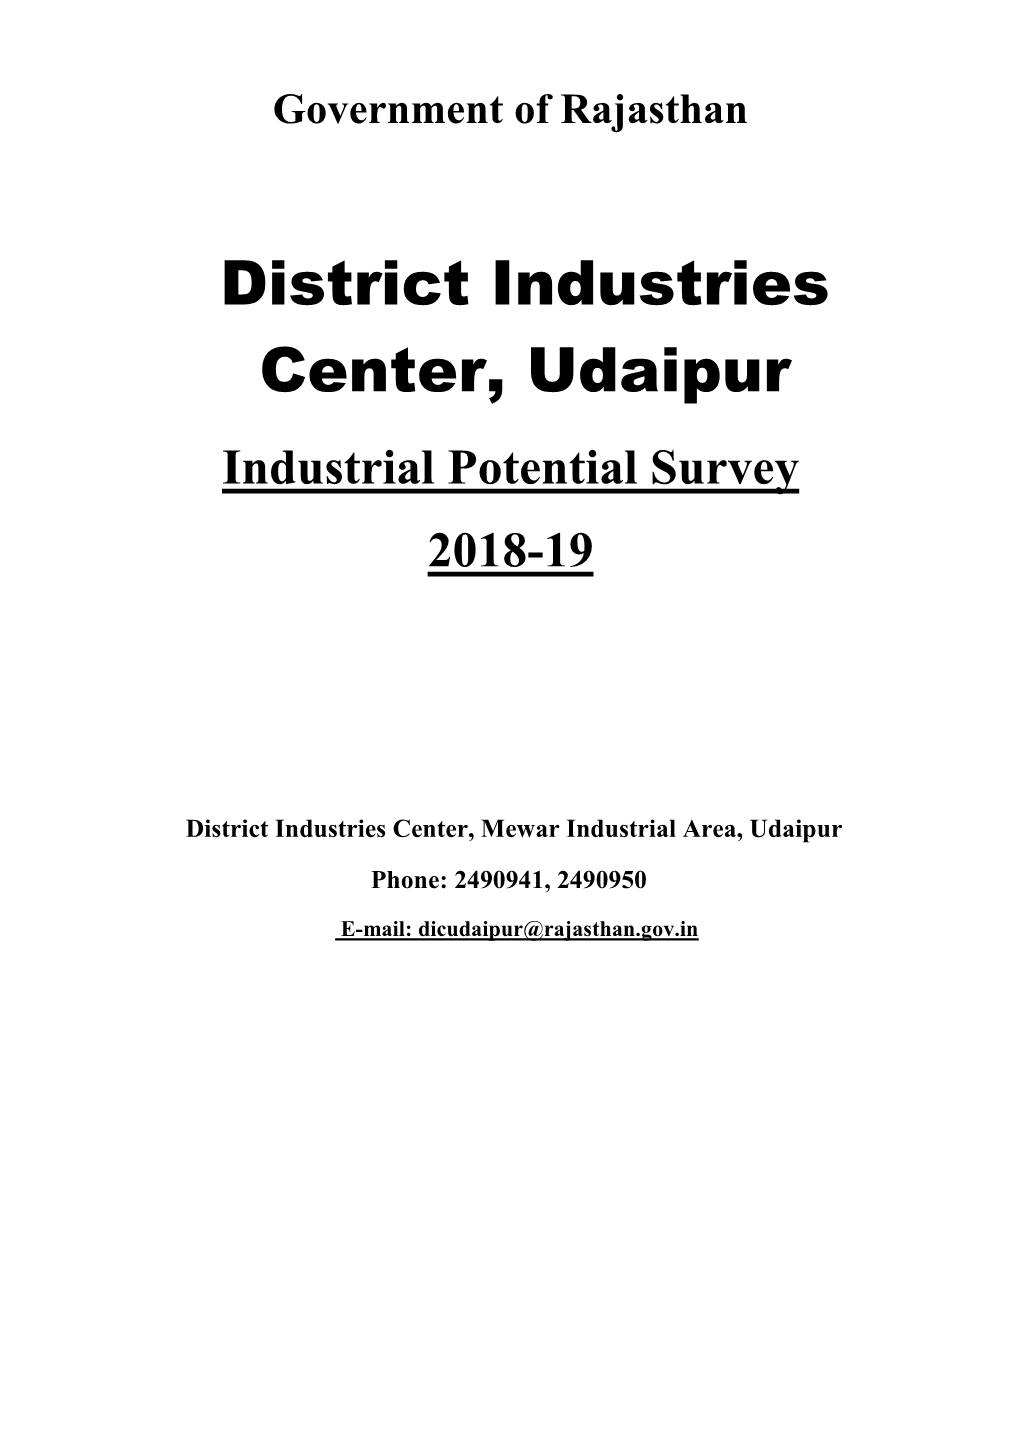 District Industries Center, Udaipur